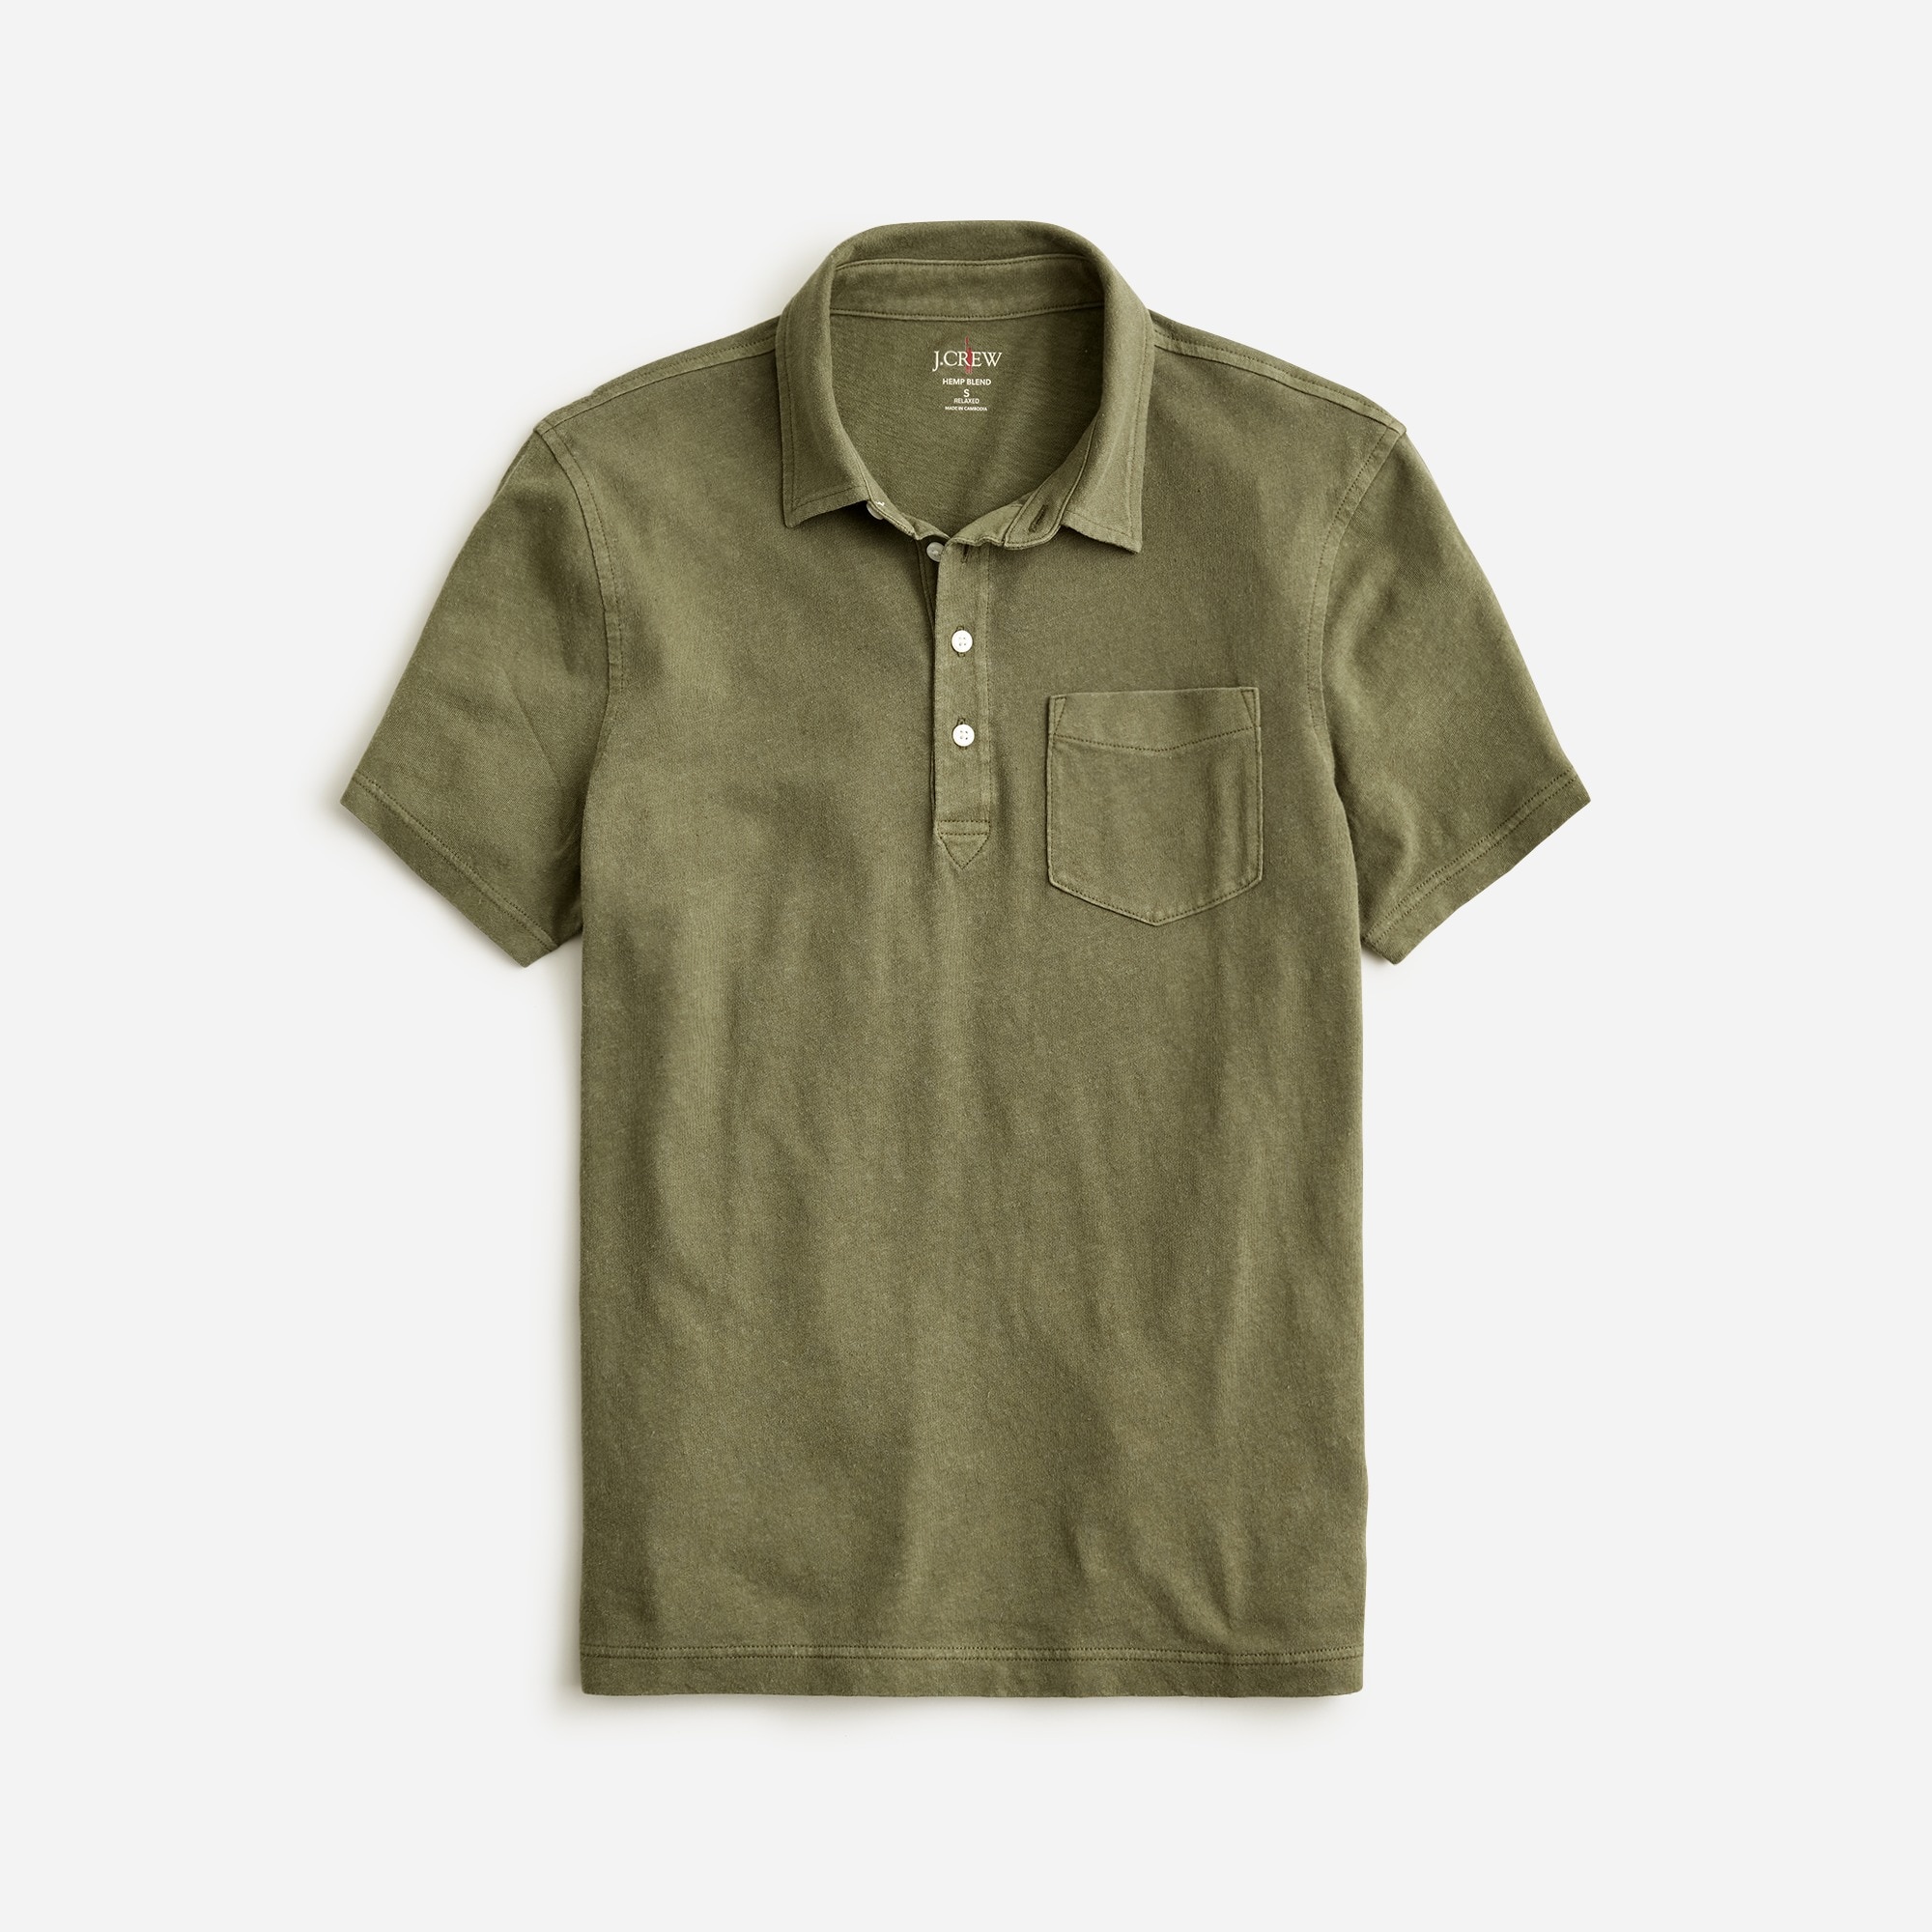 mens Hemp-organic cotton blend polo shirt